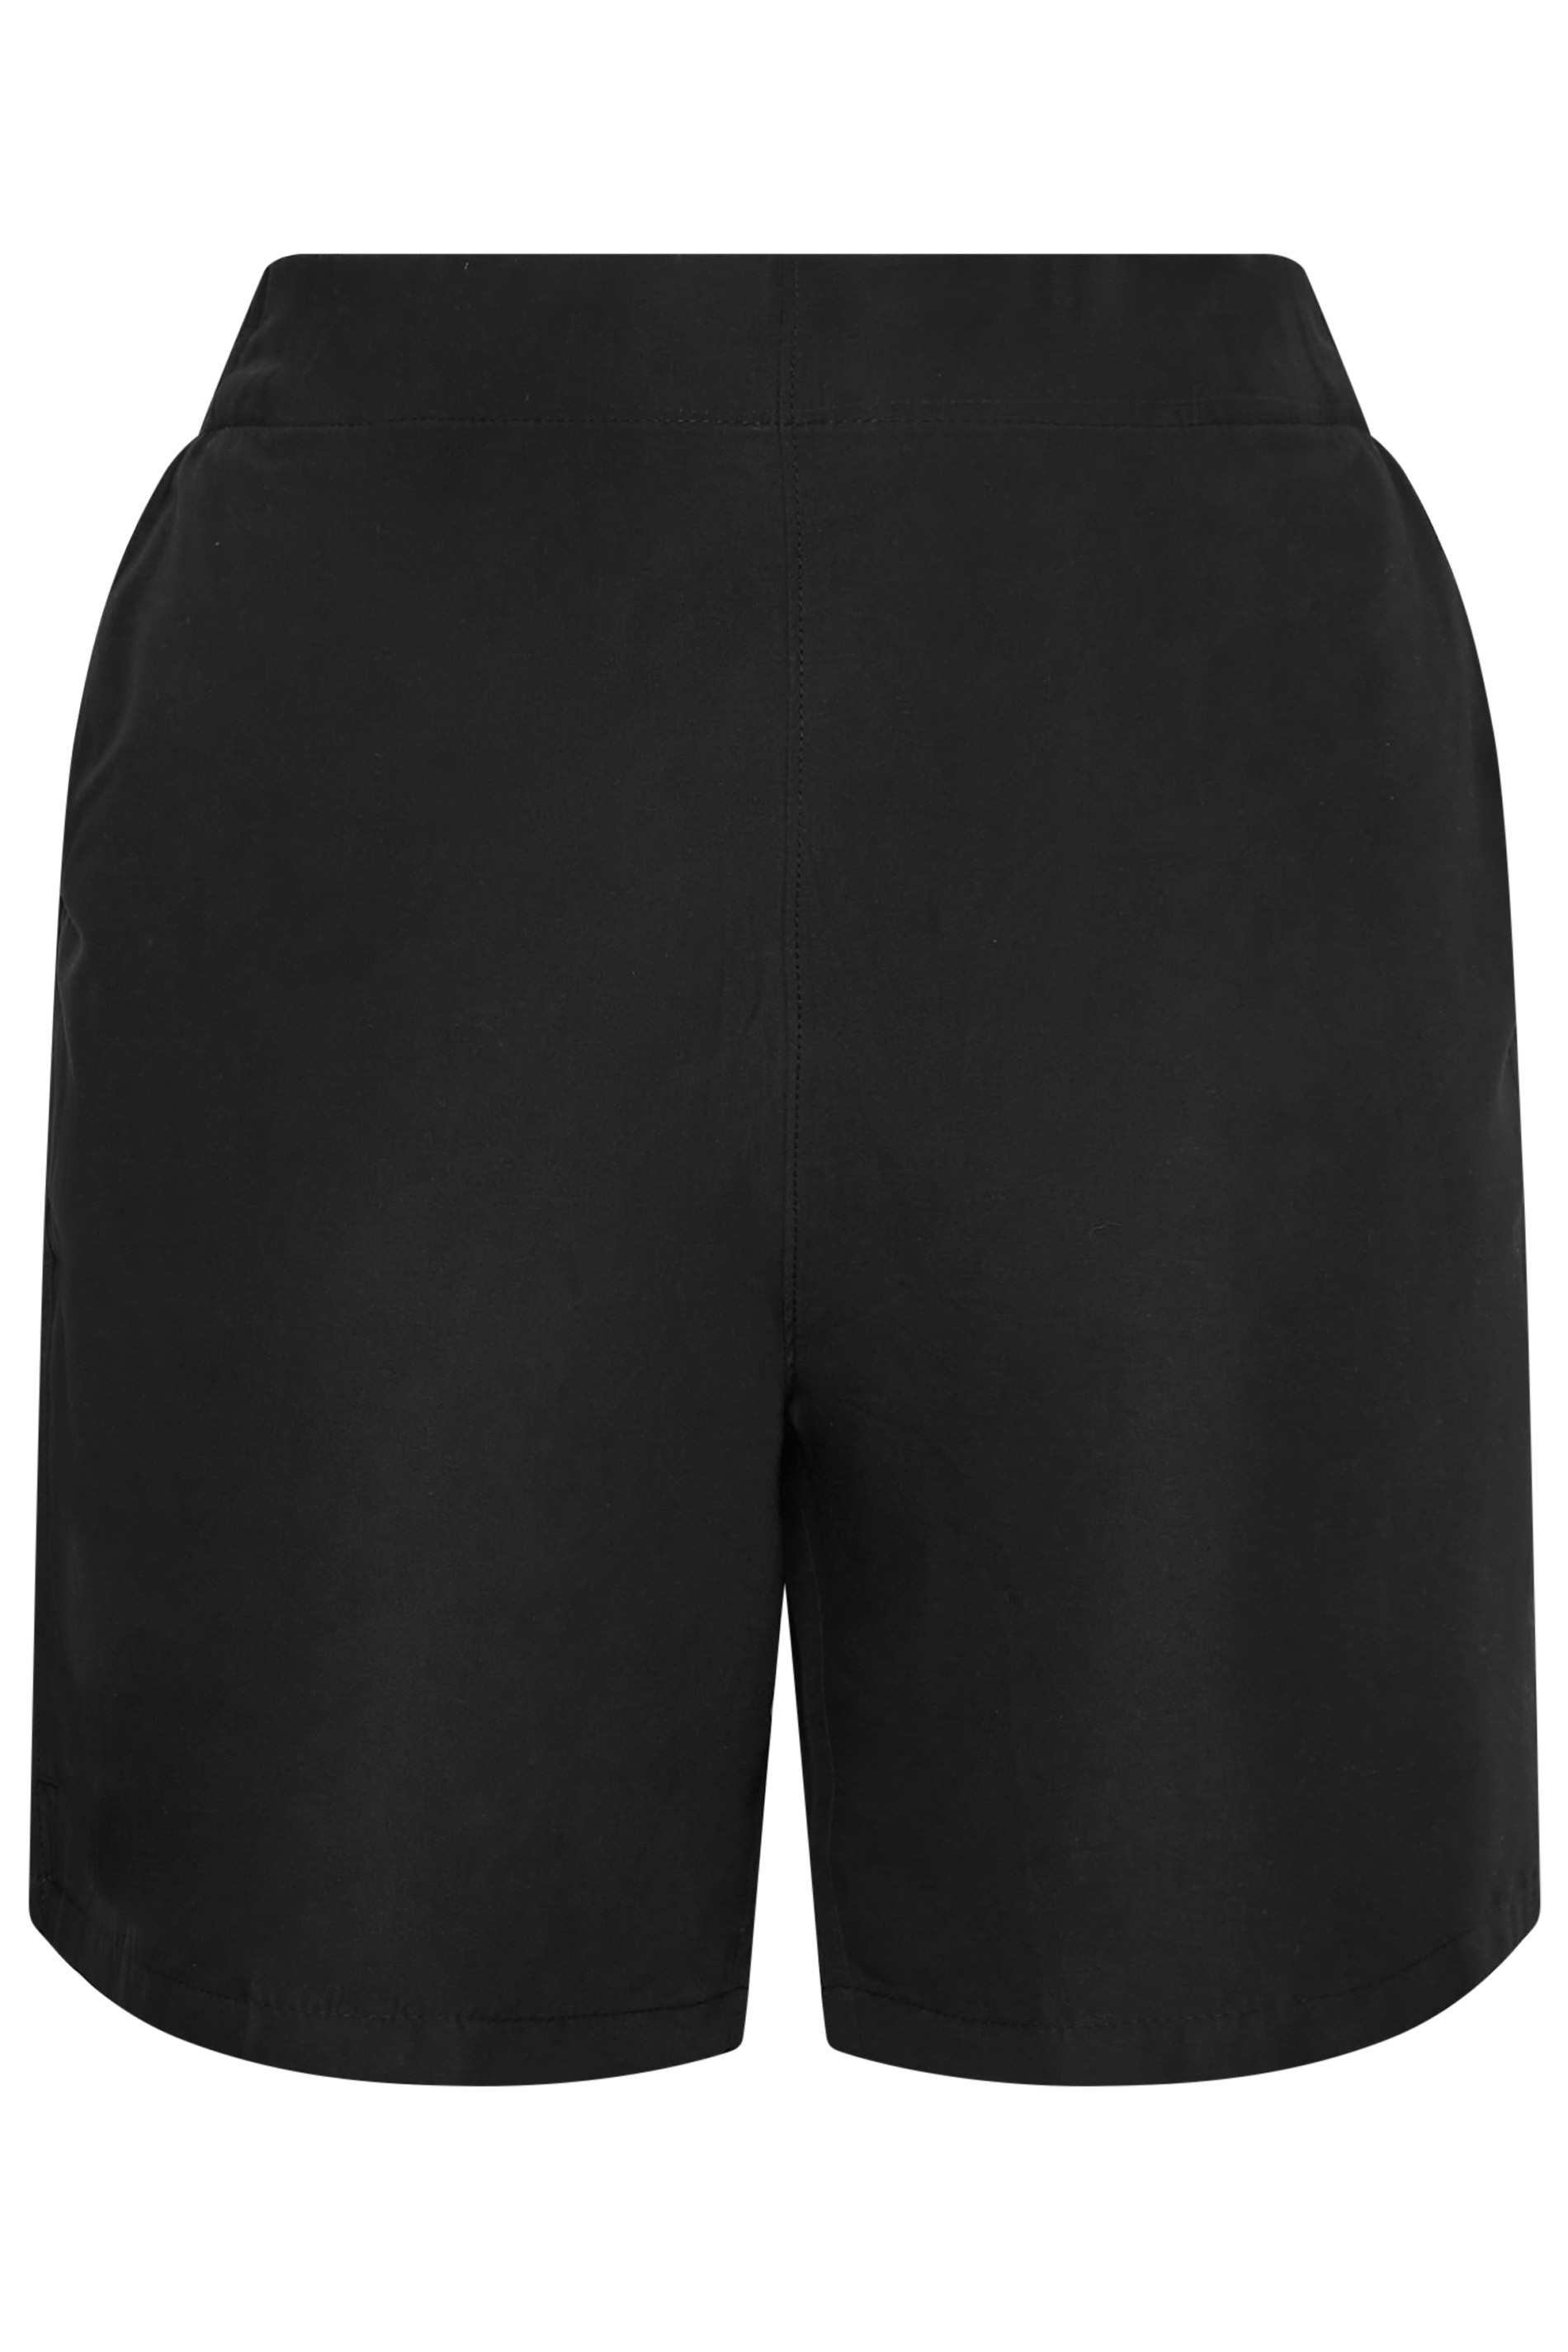 Plus Size Black Board Shorts